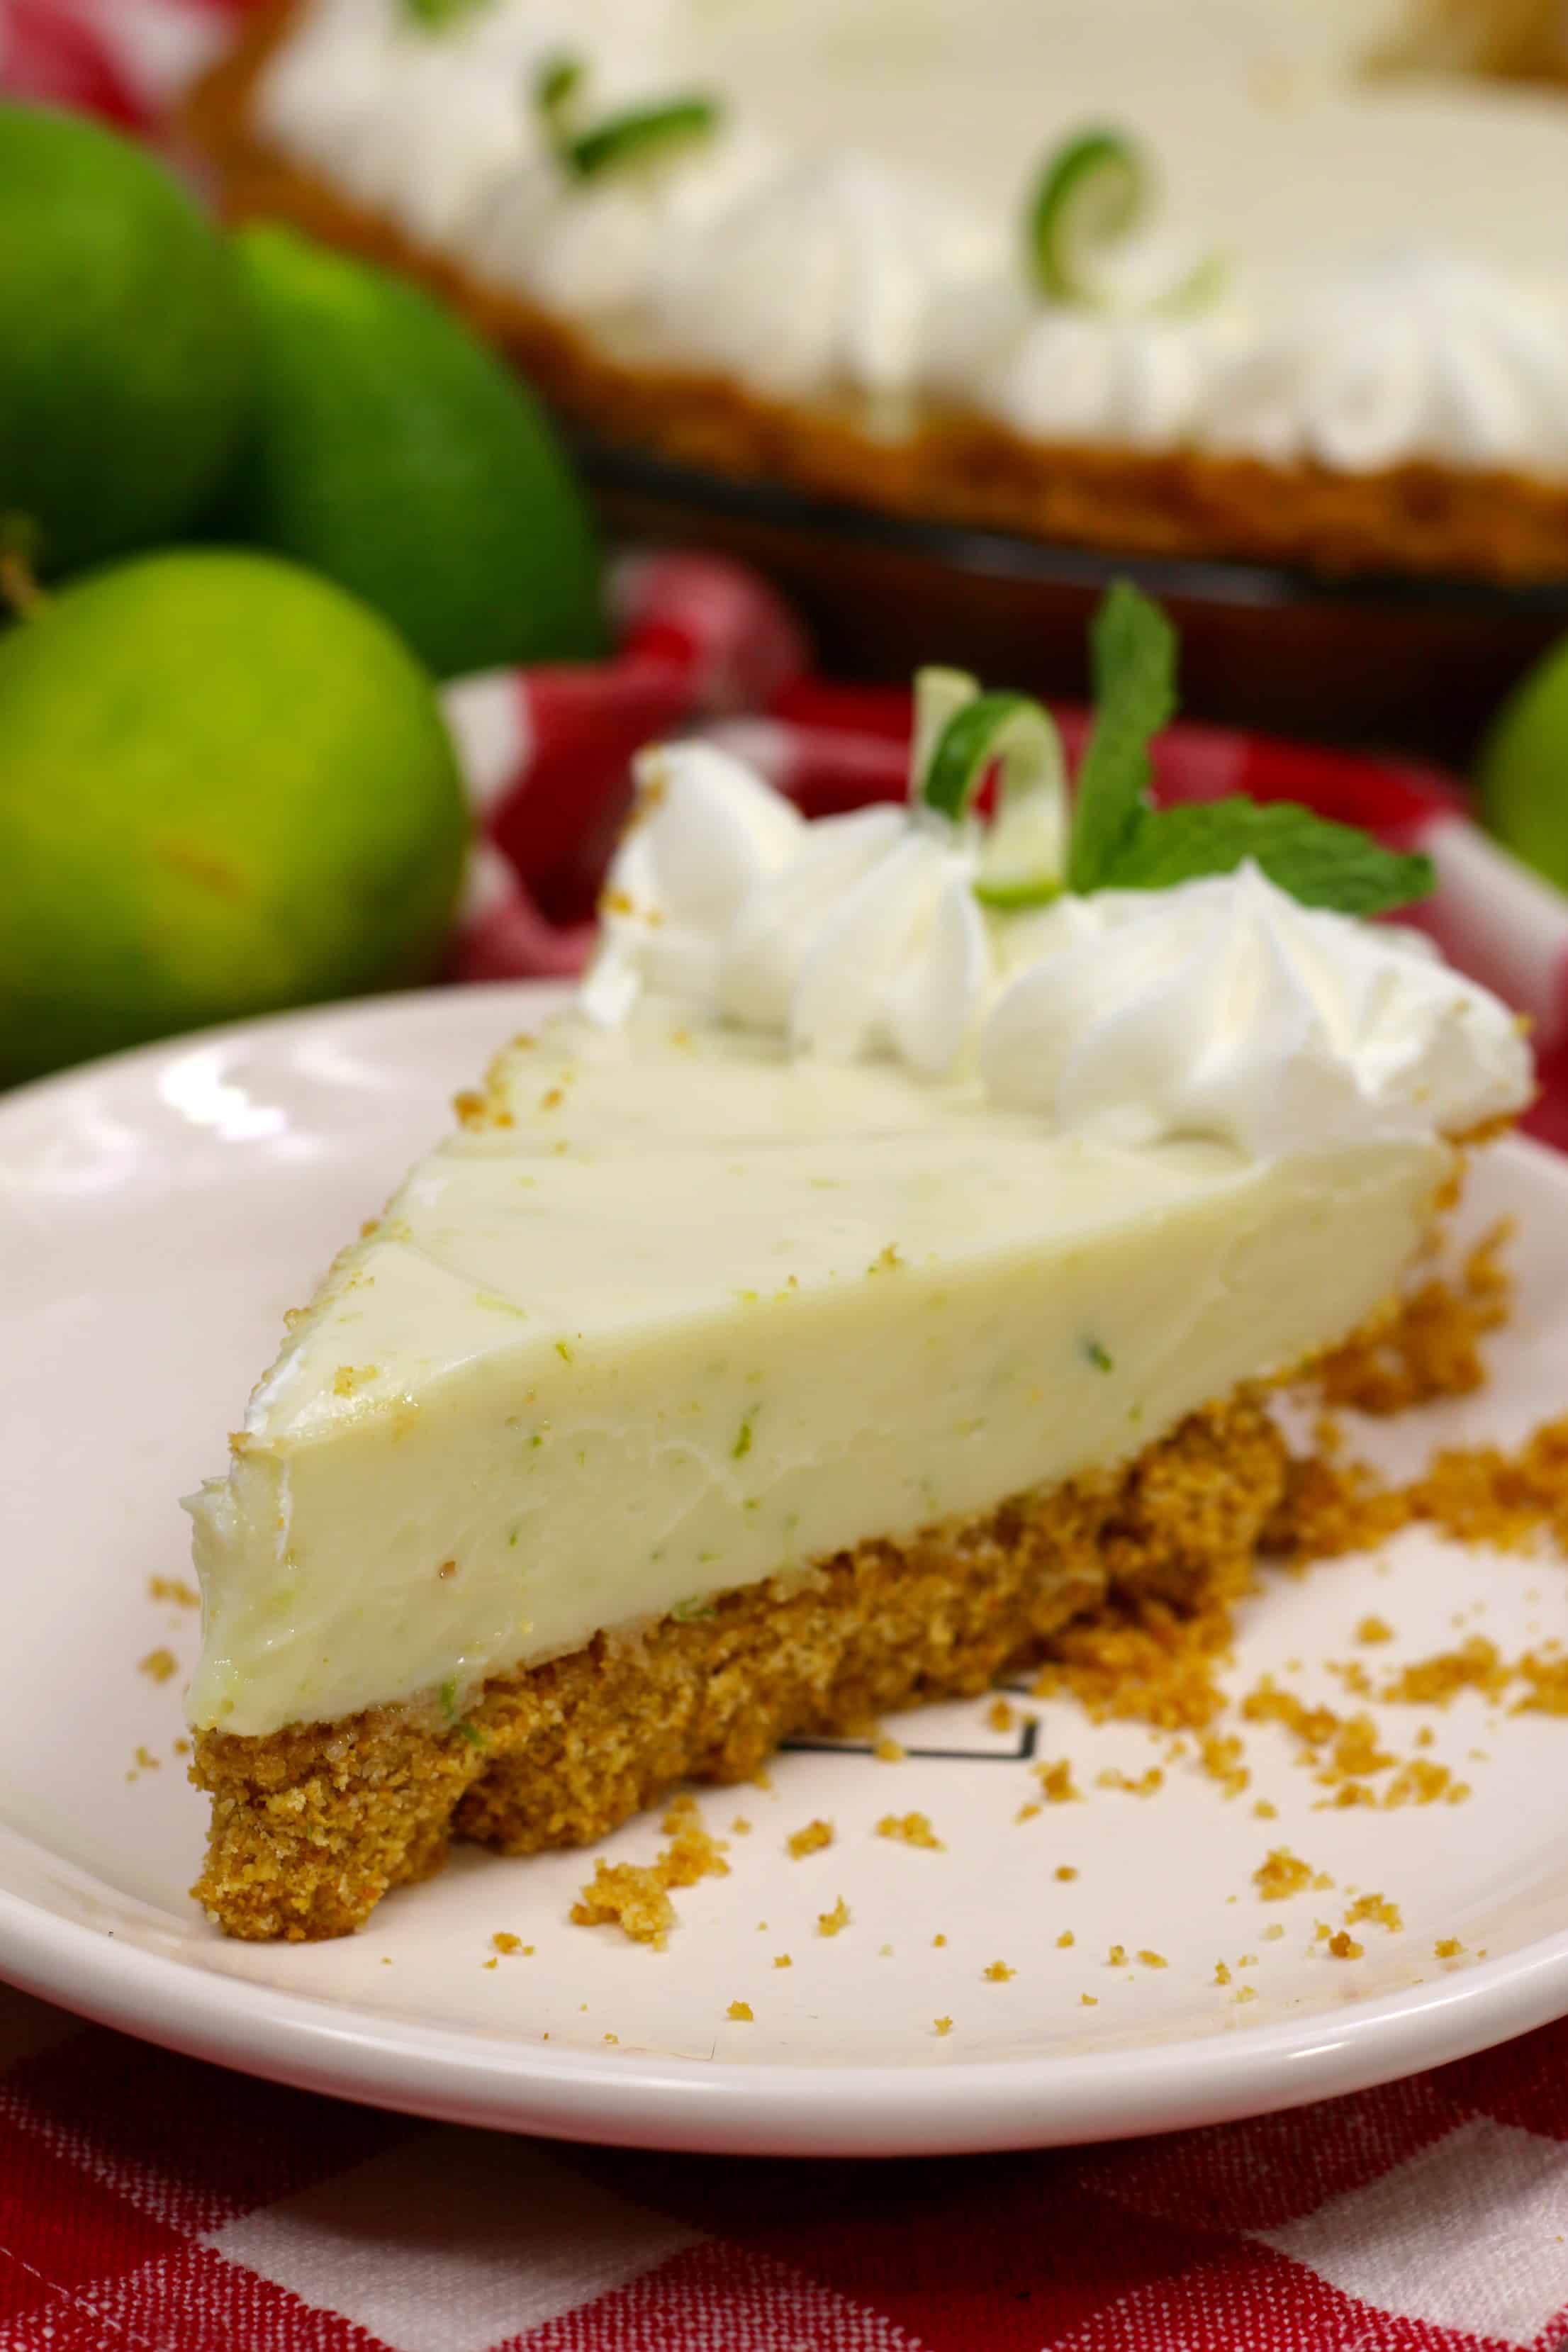 Easy Key Lime Pie Recipe